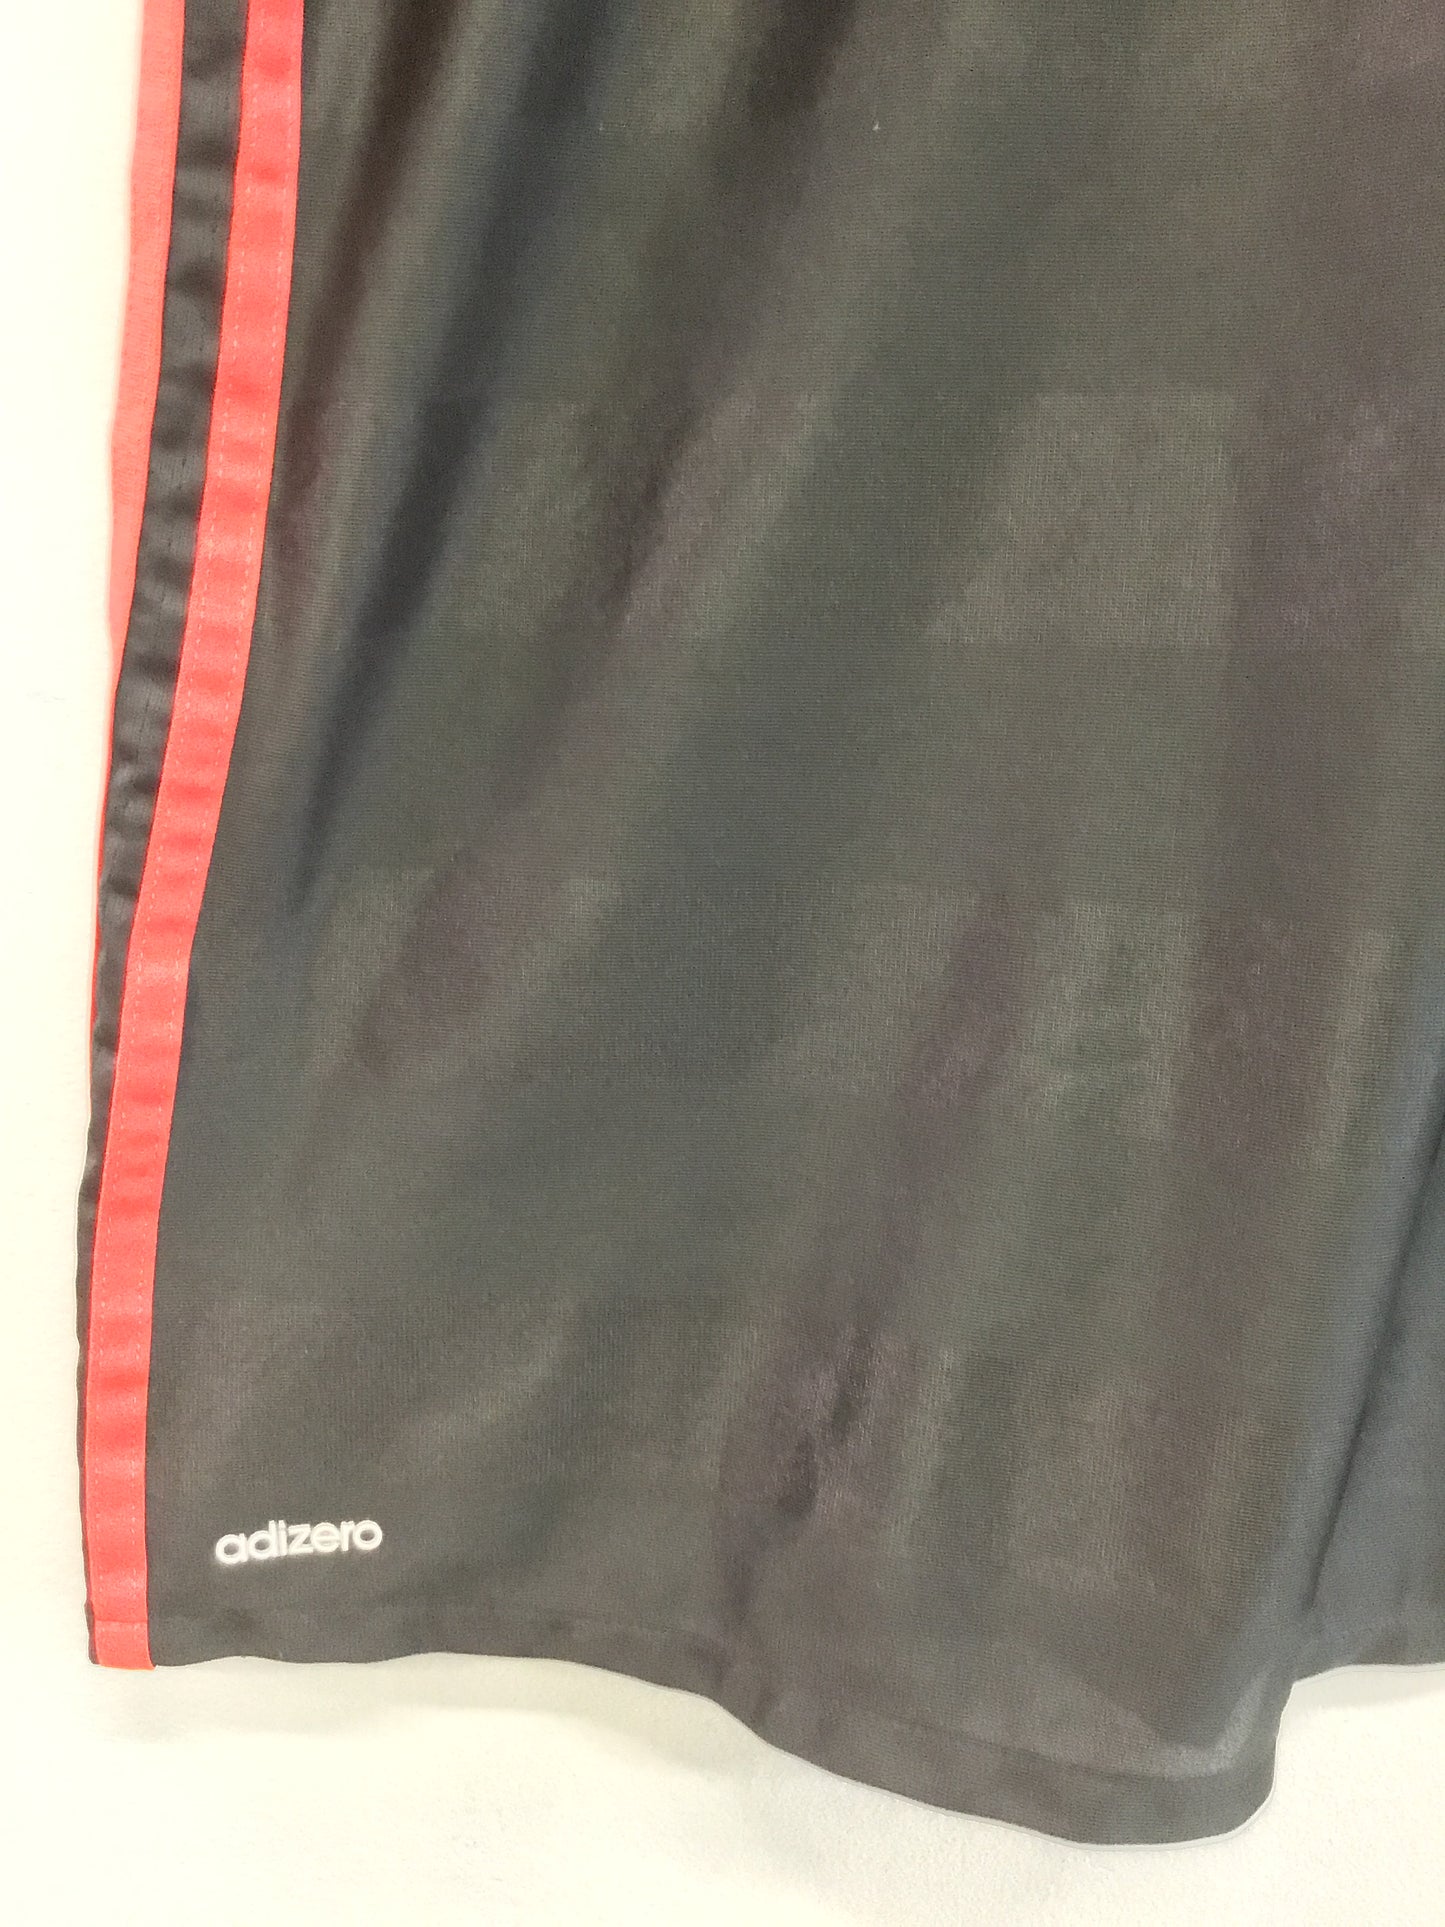 Adidas D.C. United 2016 Black Leidos Jersey, Size M